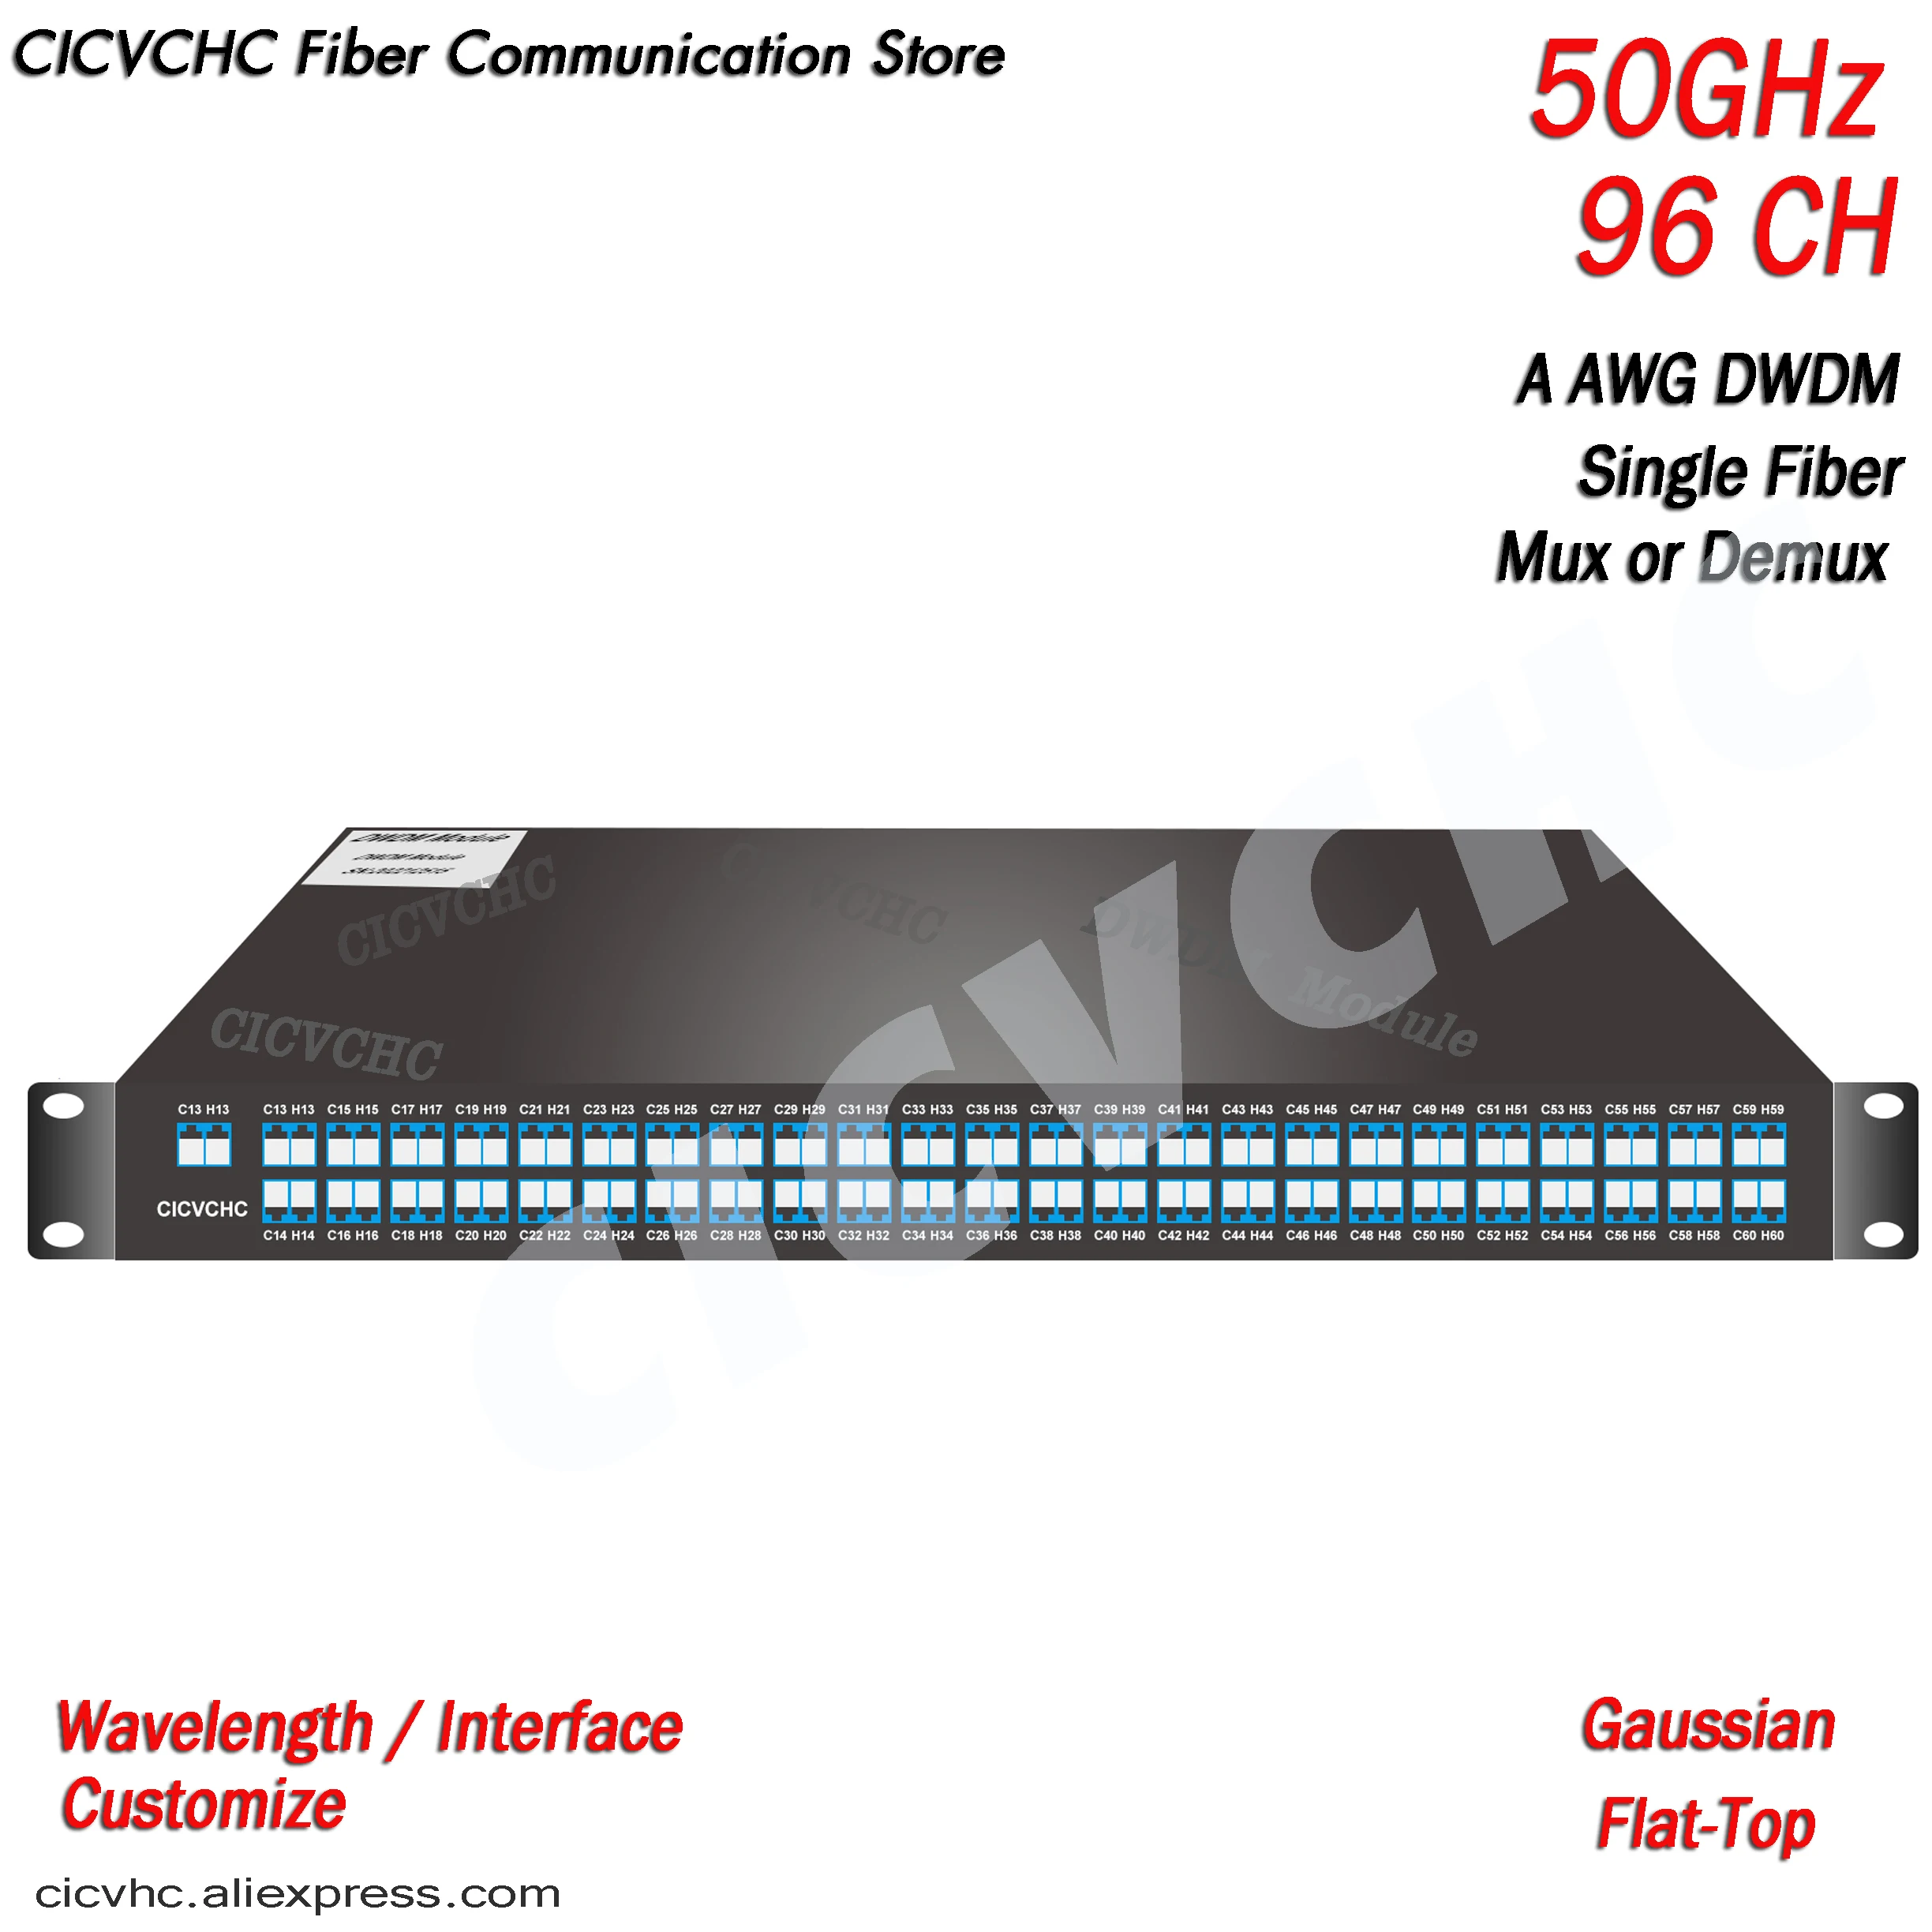 50GHz, 96 Channels DWDM MUX/DEMUX, AAWG, Gaussian or Flat-Top, LC/UPC, Single Fiber 1U Rack